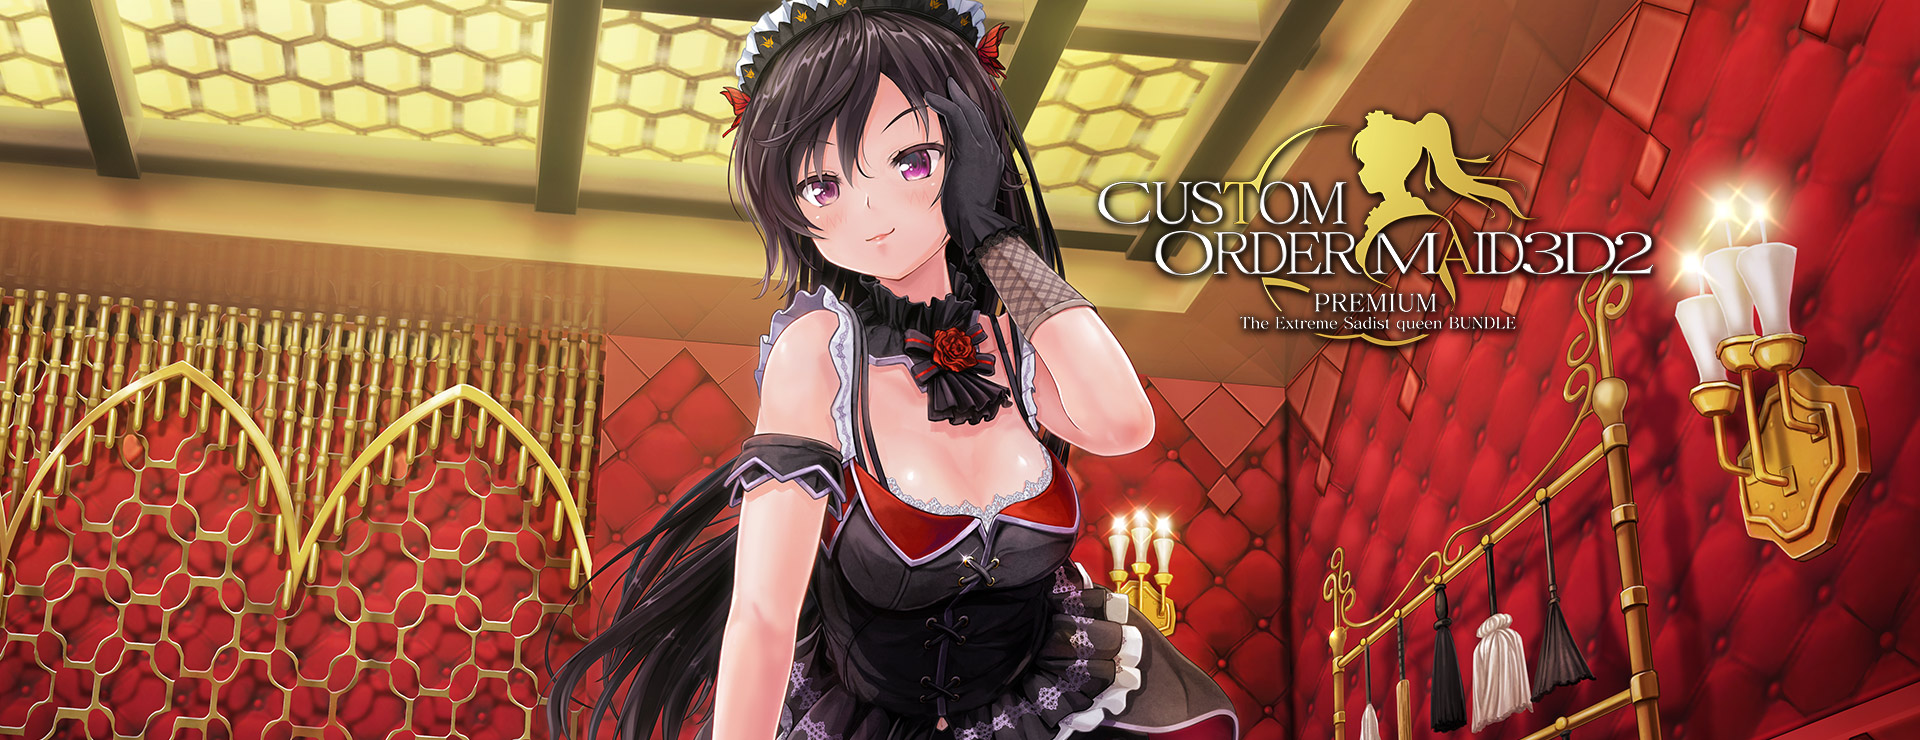 Custom Order Maid 3D2: Extreme Sadist Queen Bundle - 仿真游戏 遊戲